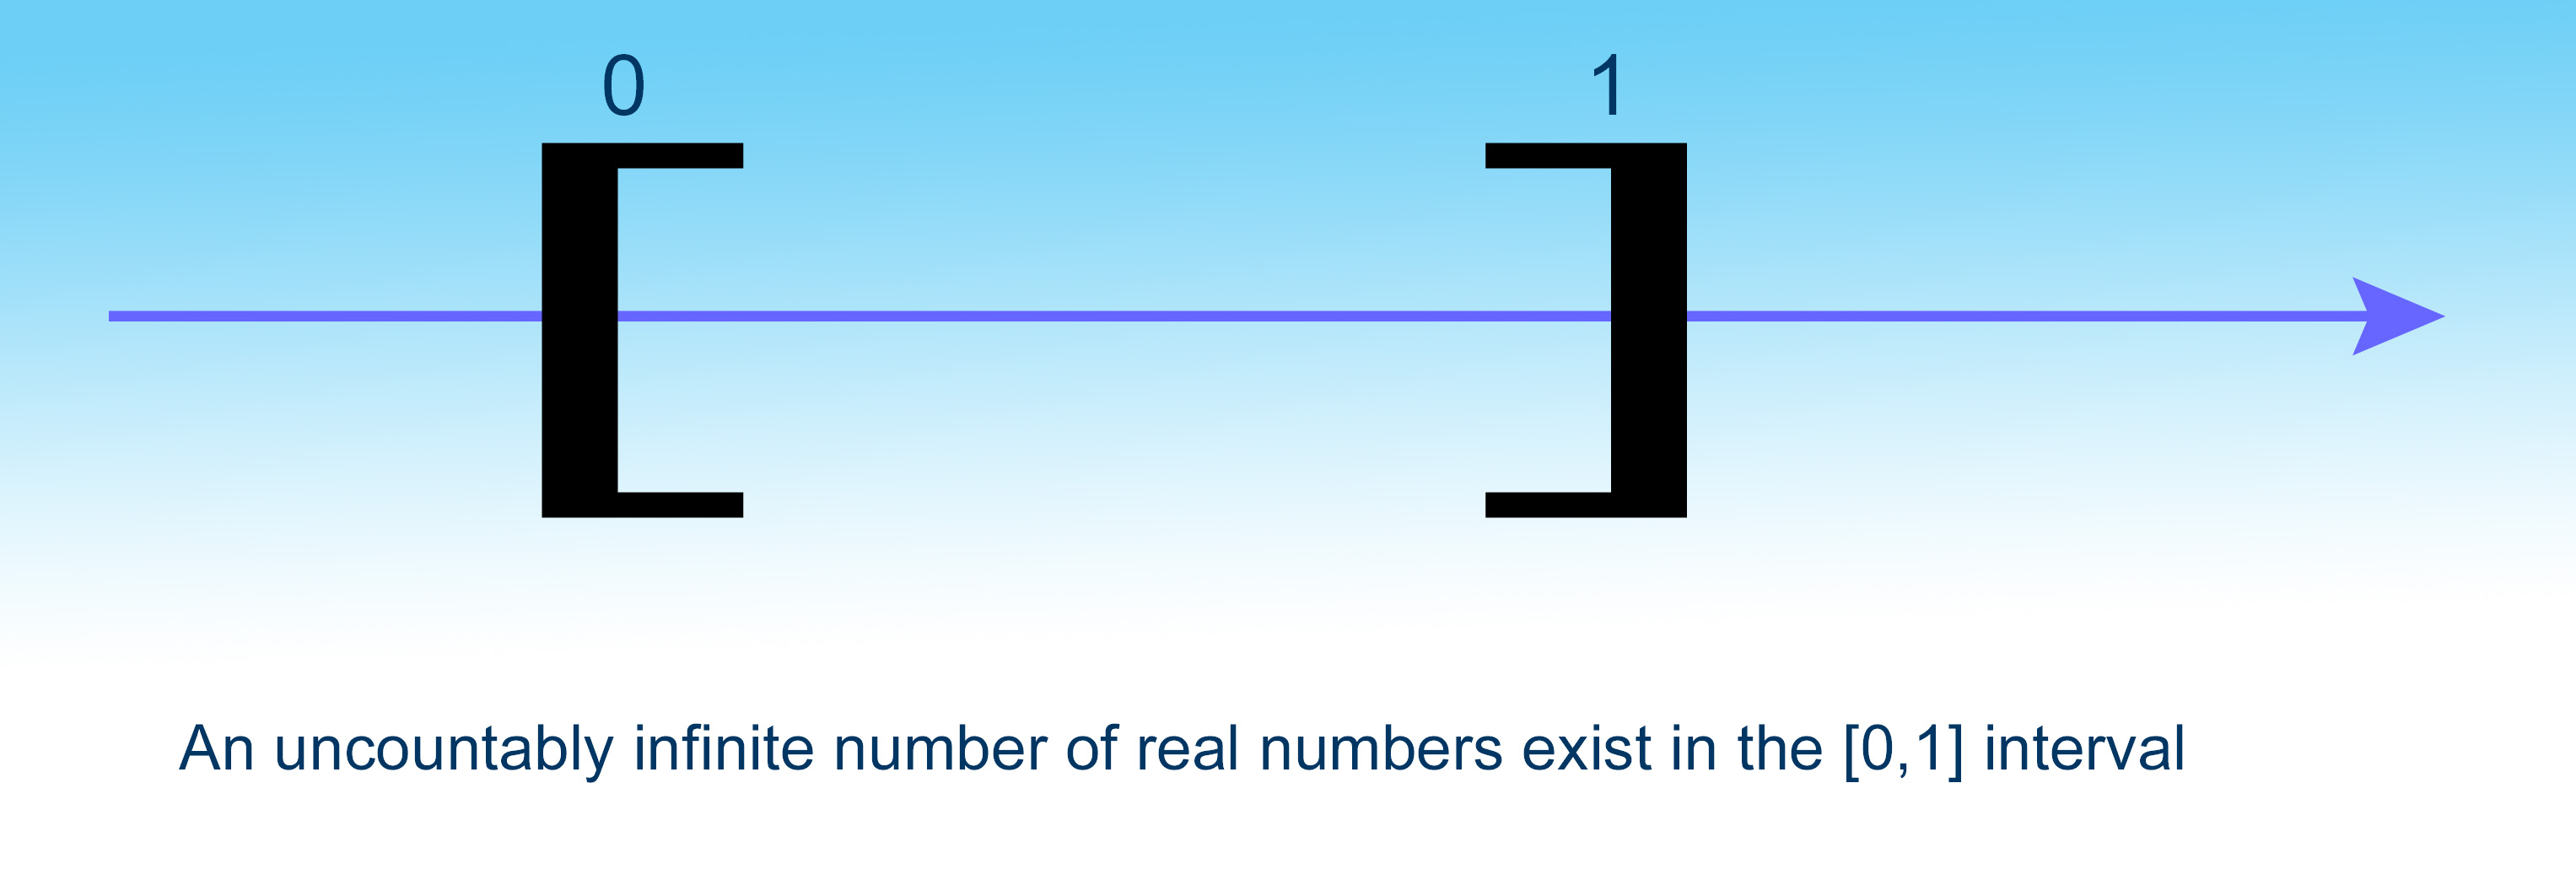 Countablity of infinite numbers
